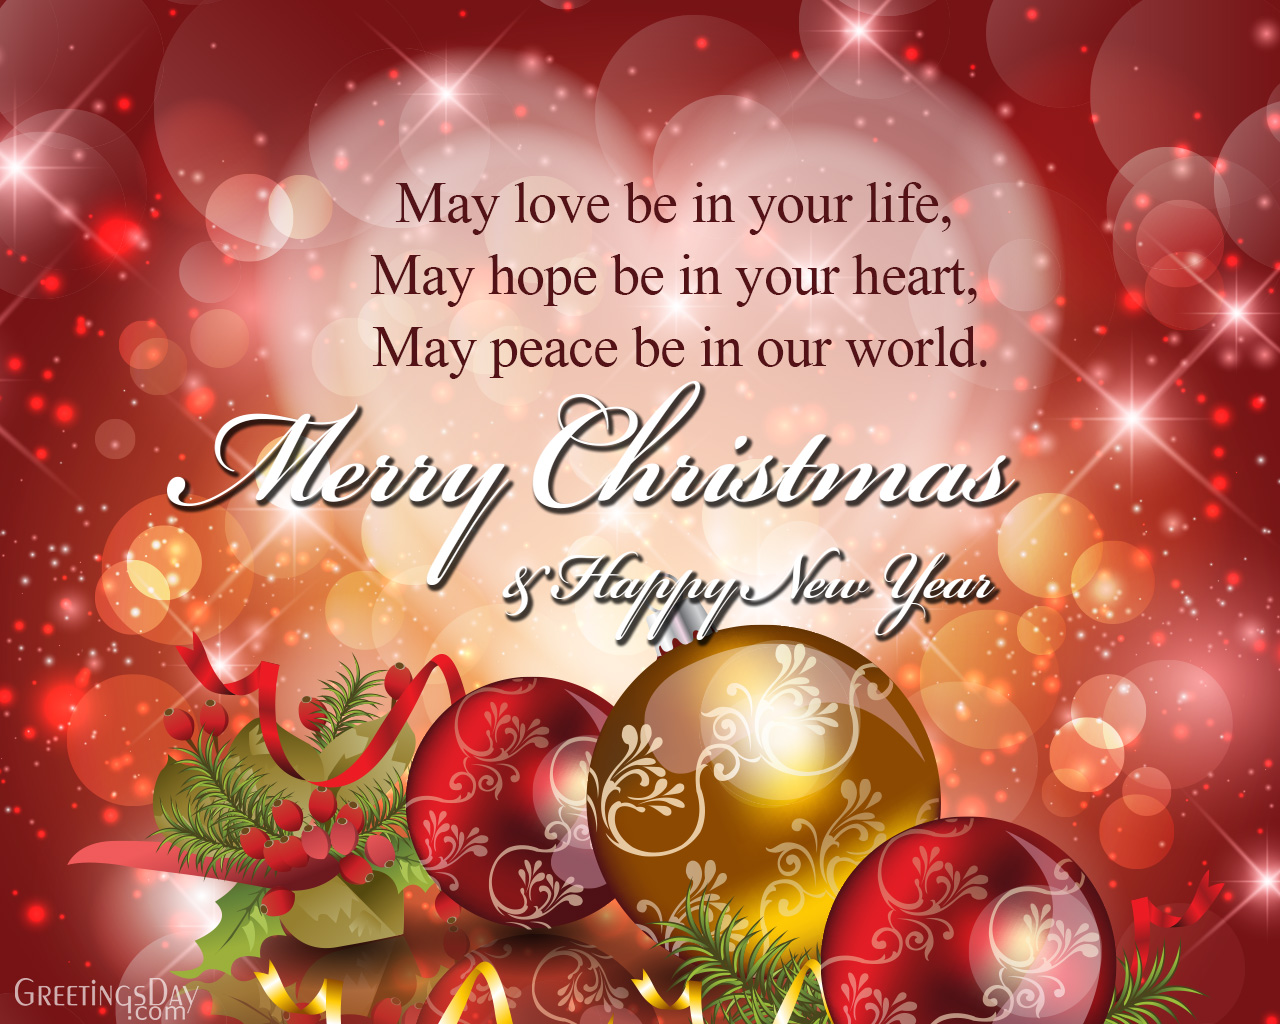 merry-christmas-love-card-wishes.jpg